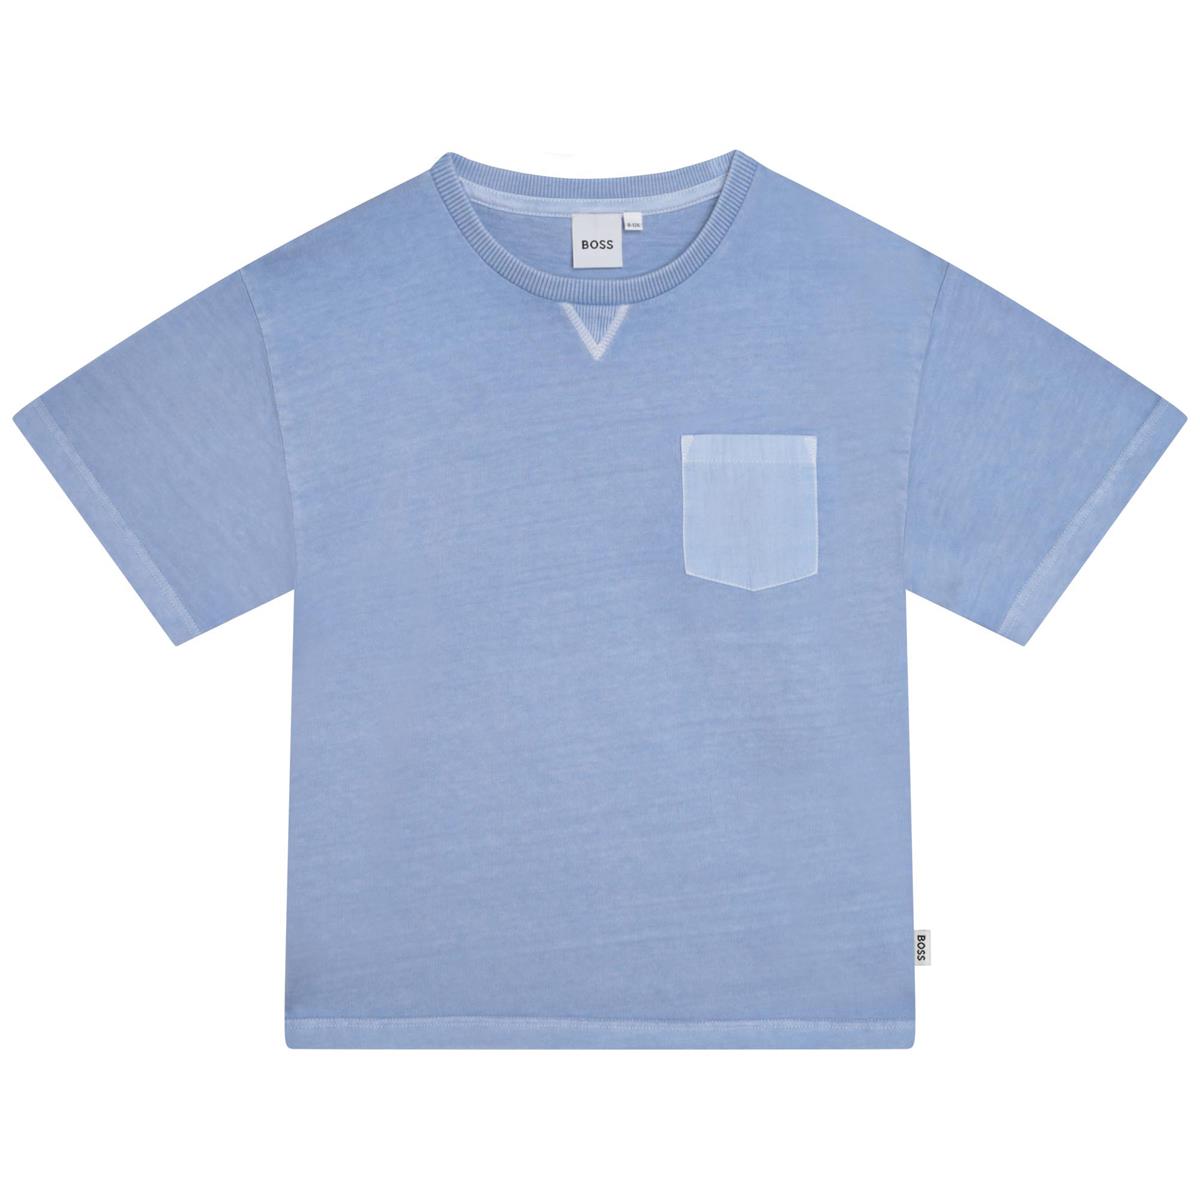 Boys Lihgt Blue T-Shirt